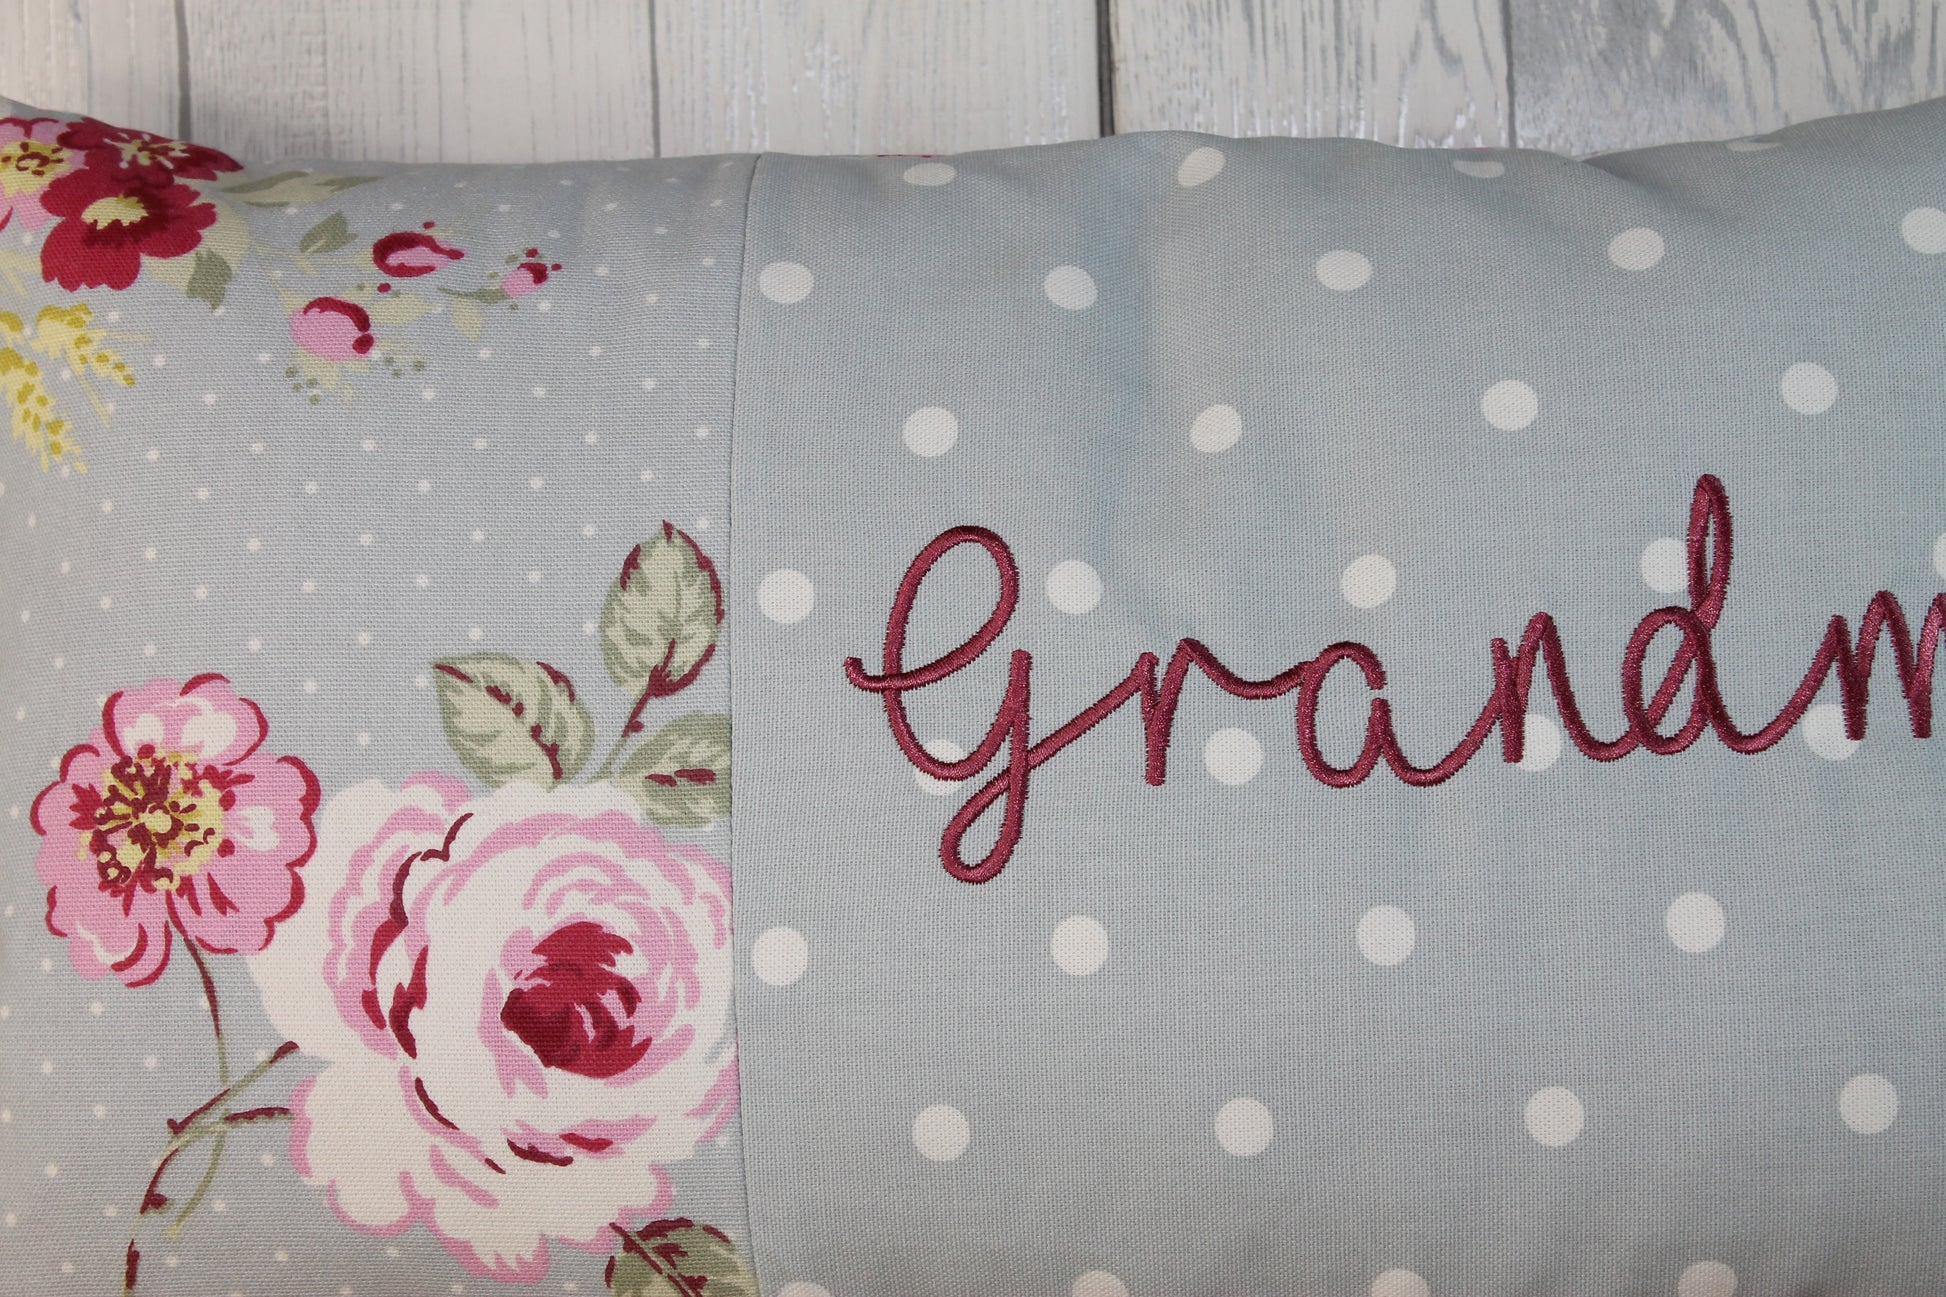 Grandma Cushion- Mother's Day Cushion - Lizzie Dixon Designs